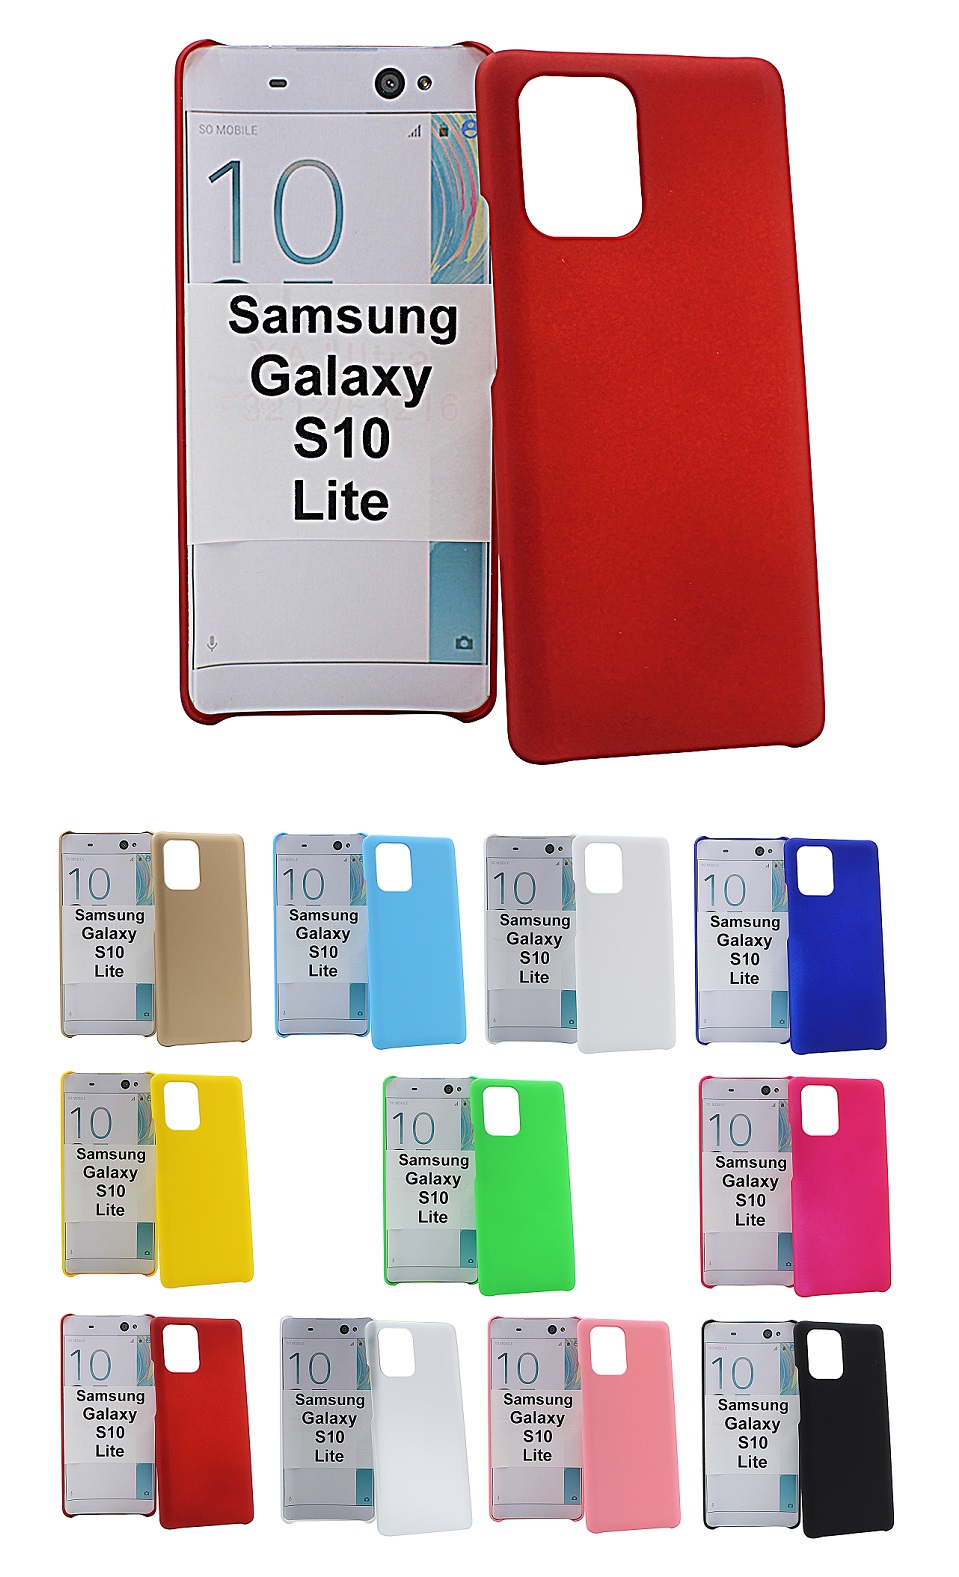 Hardcase Cover Samsung Galaxy S10 Lite (G770F)